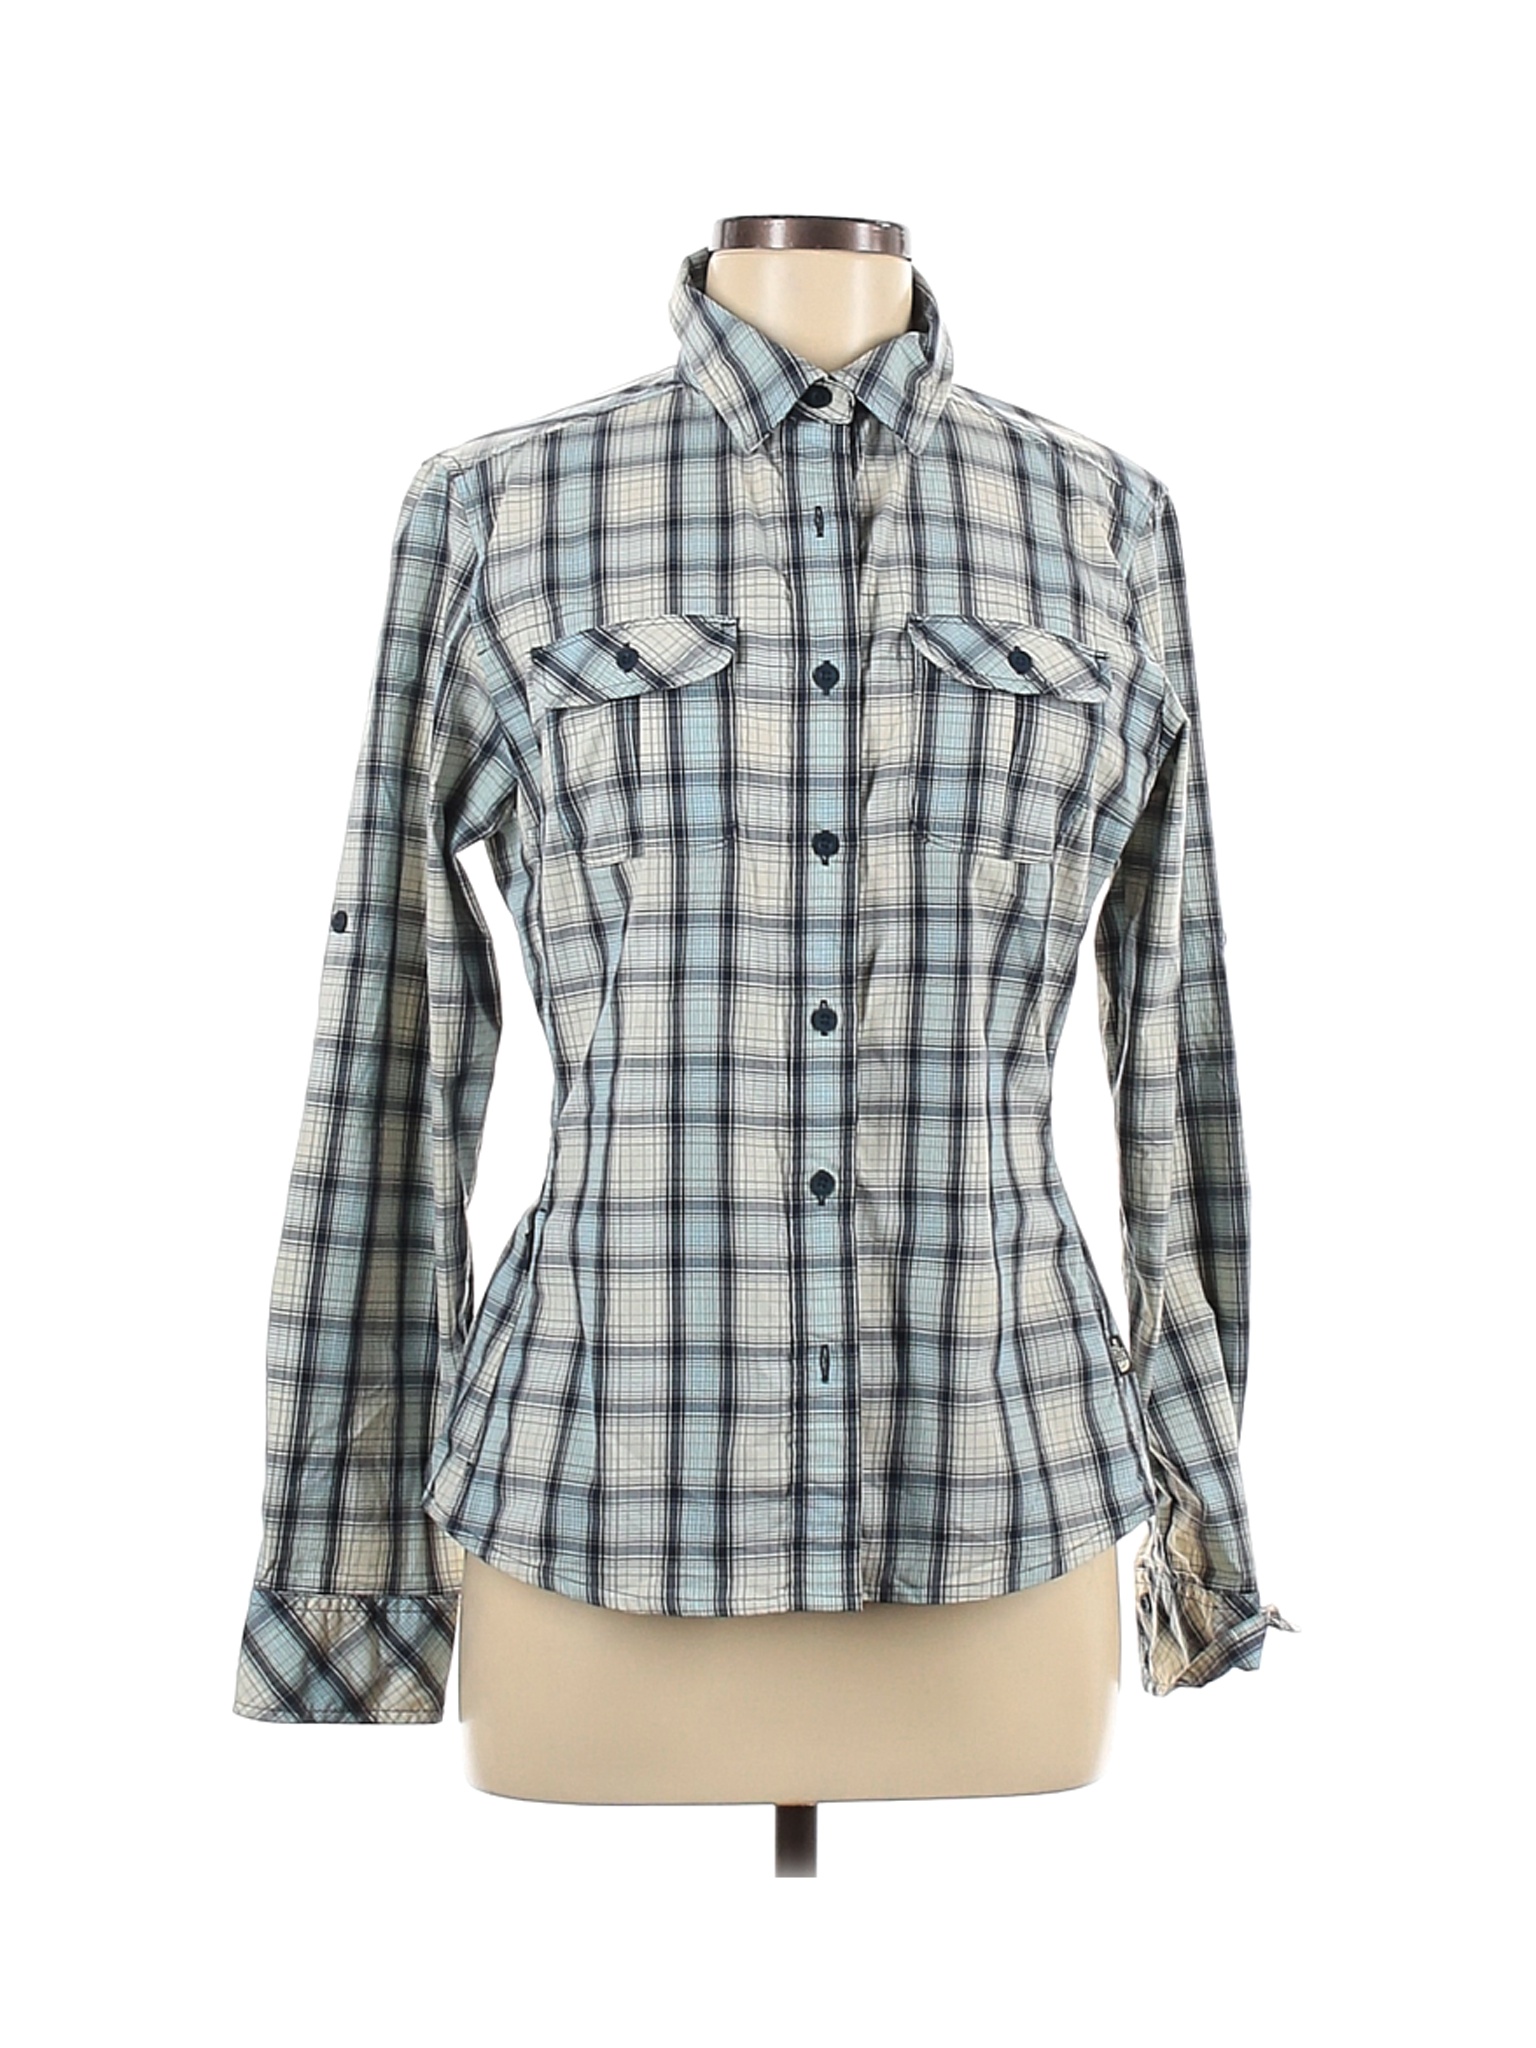 The North Face Women Blue Long Sleeve Button-Down Shirt M | eBay